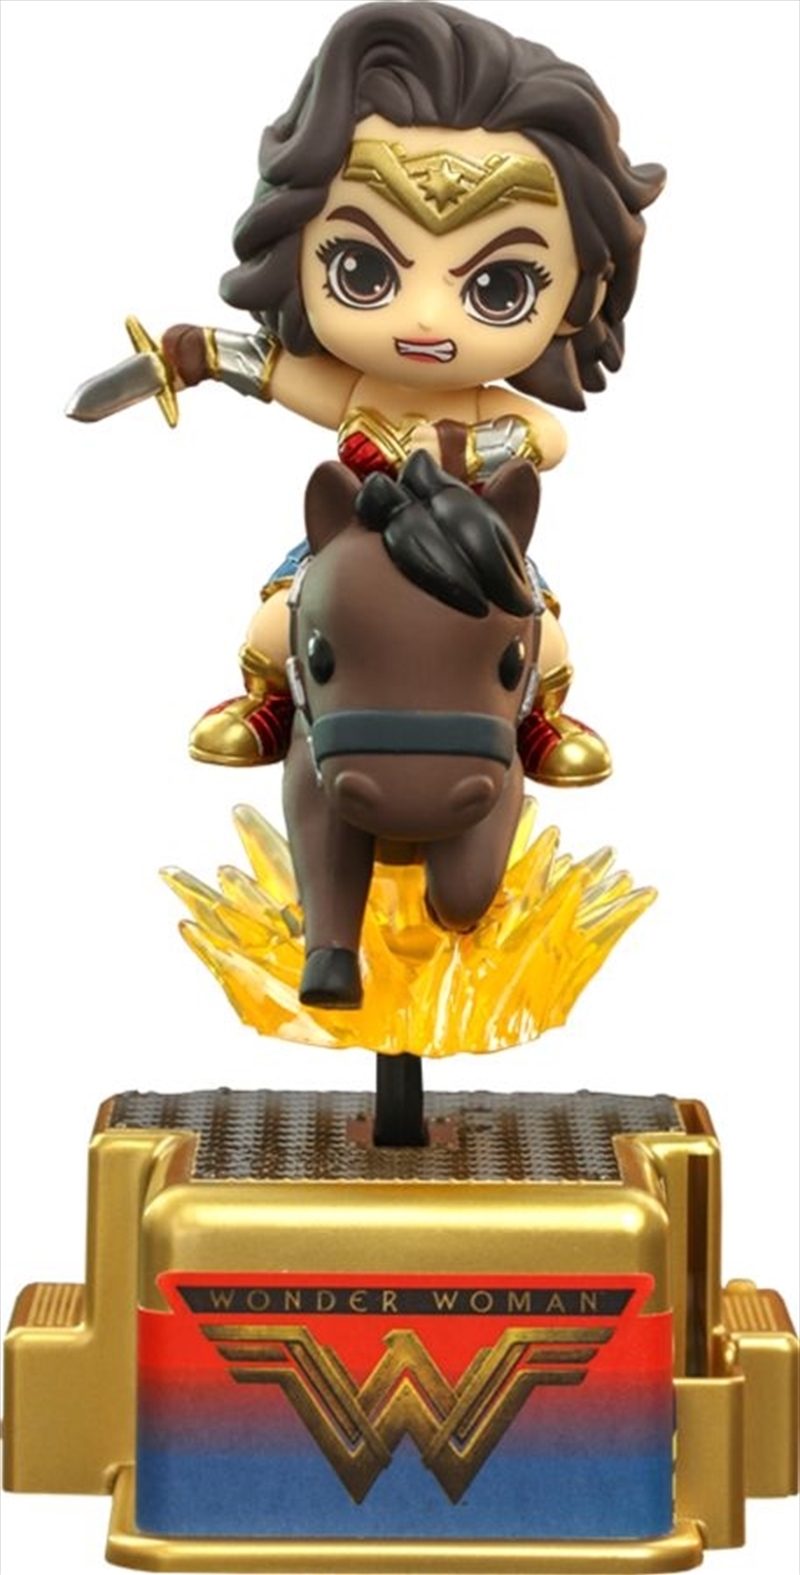 Wonder Woman - Wonder Woman on Horse CosRider | Merchandise